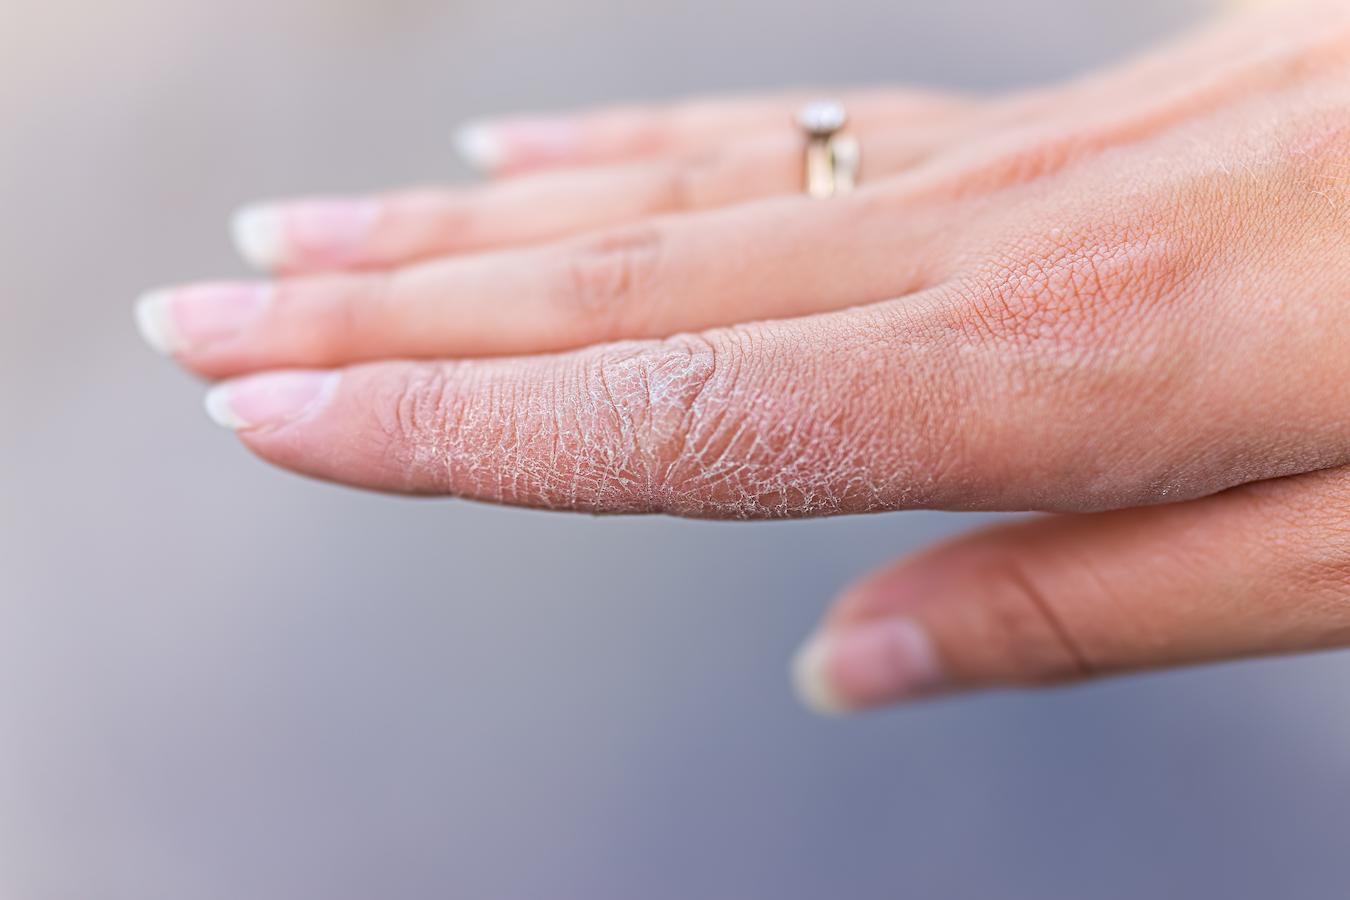 dry hands appearance of wrinkles reduce wrinkles skin texture skin cancer anti wrinkle creams